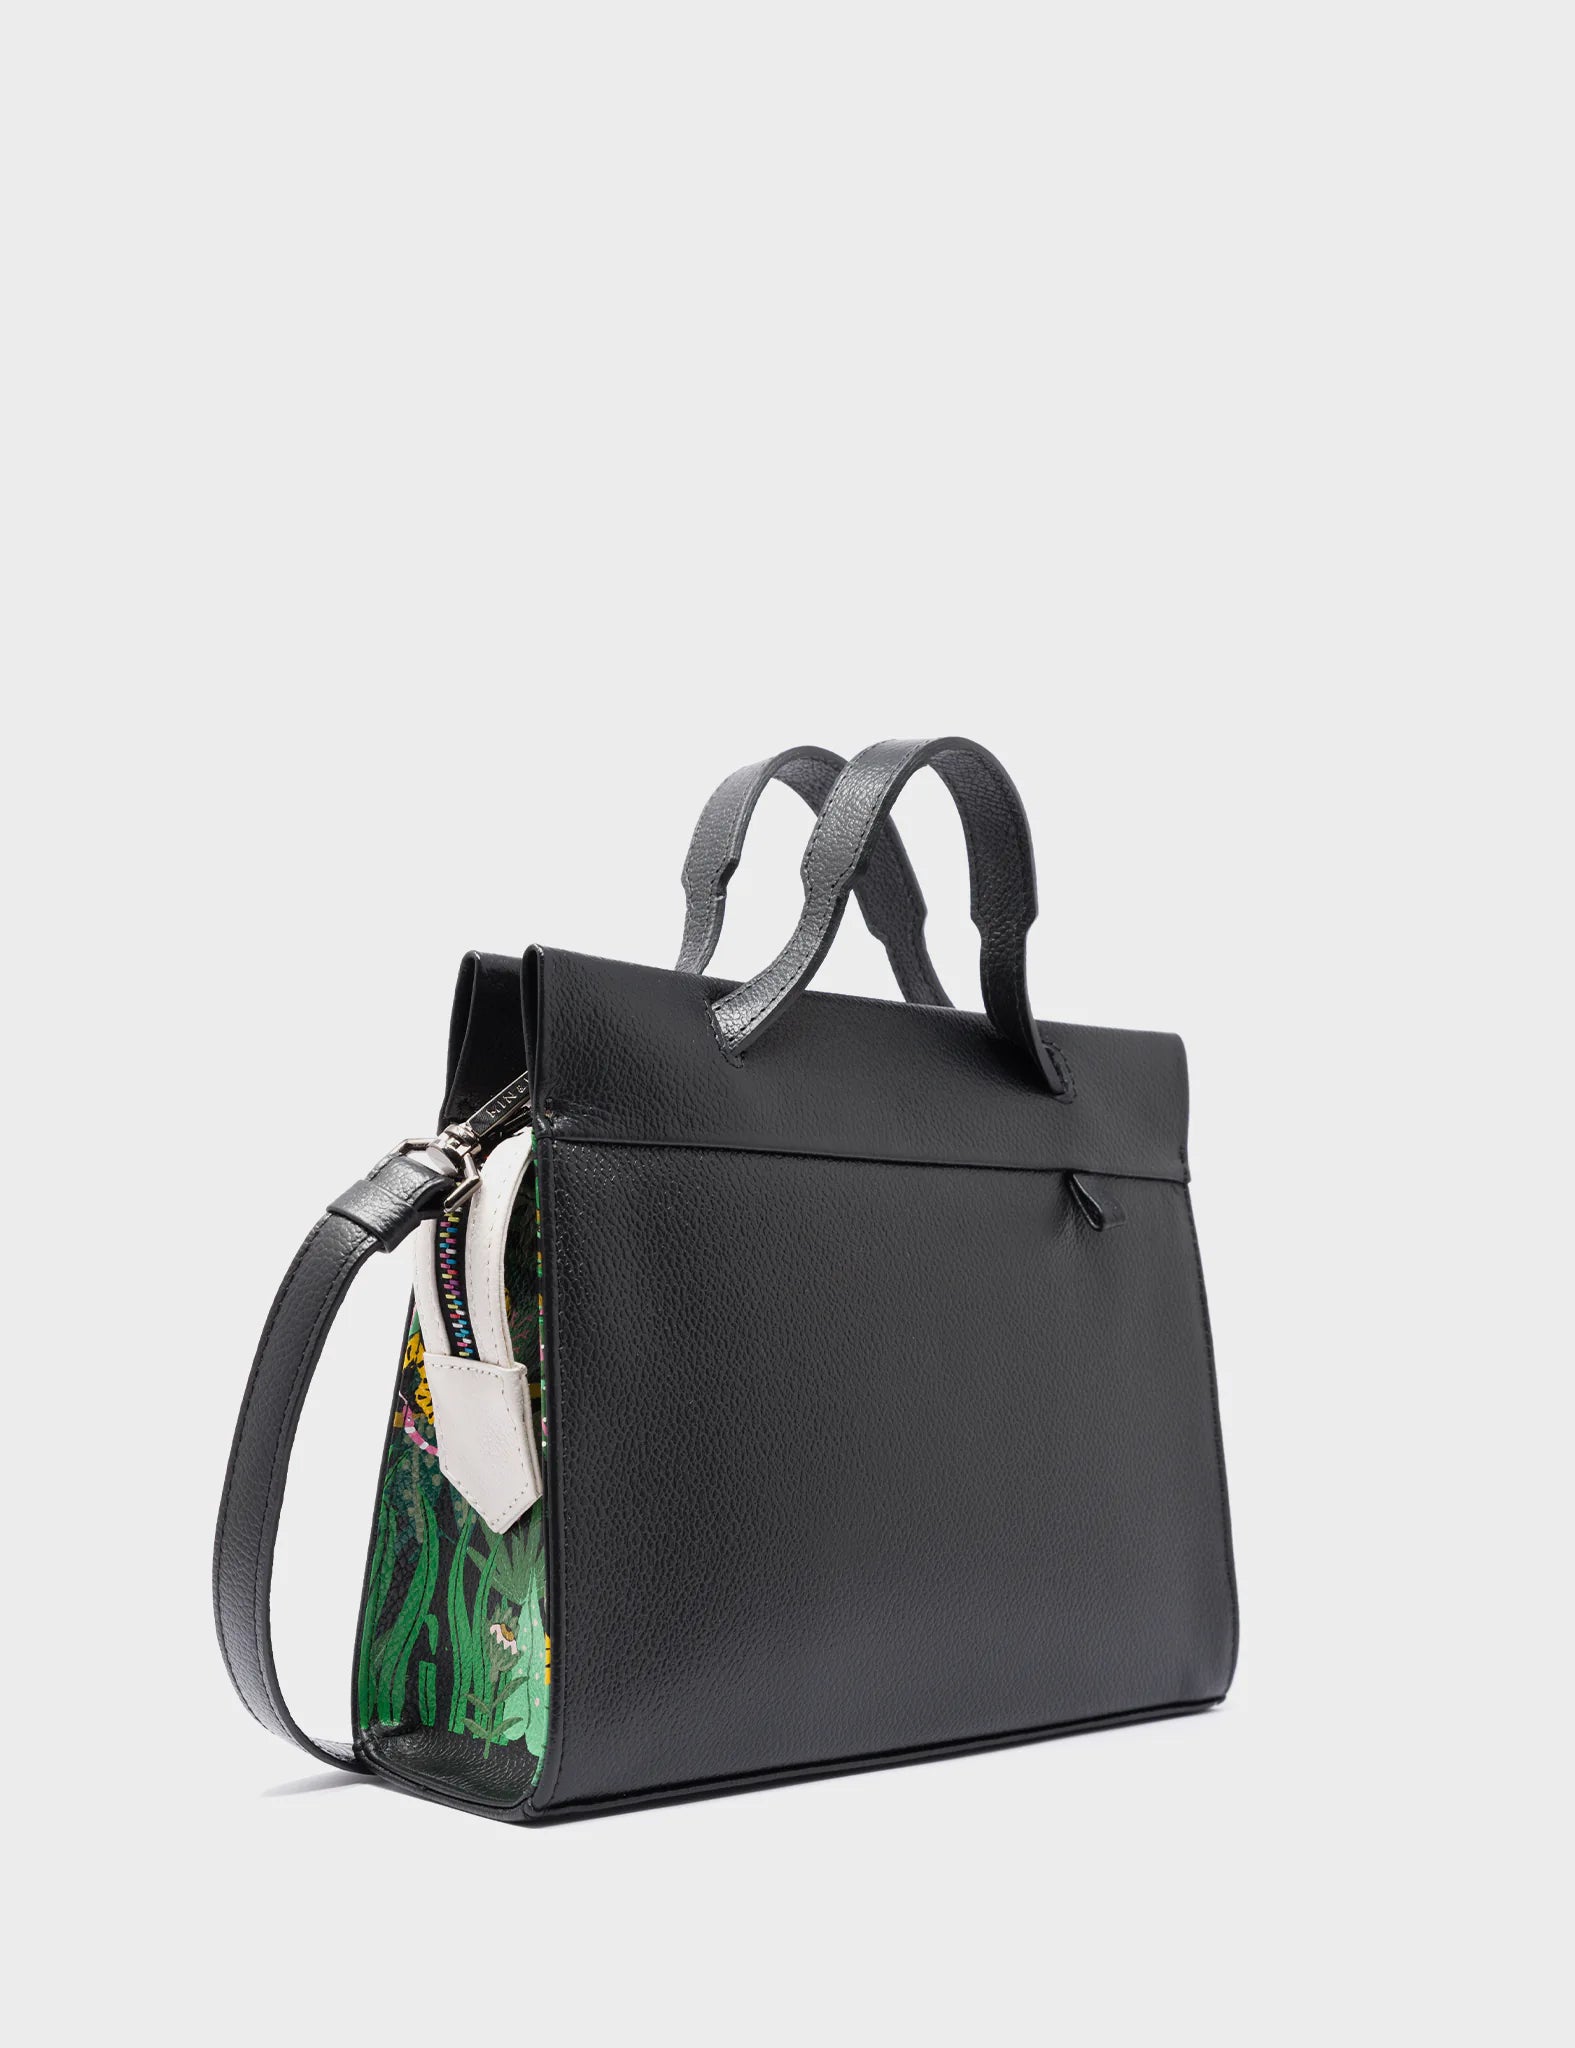 Vali Crossbody Small Black Leather Bag - El Tropico Print Design - top handles 